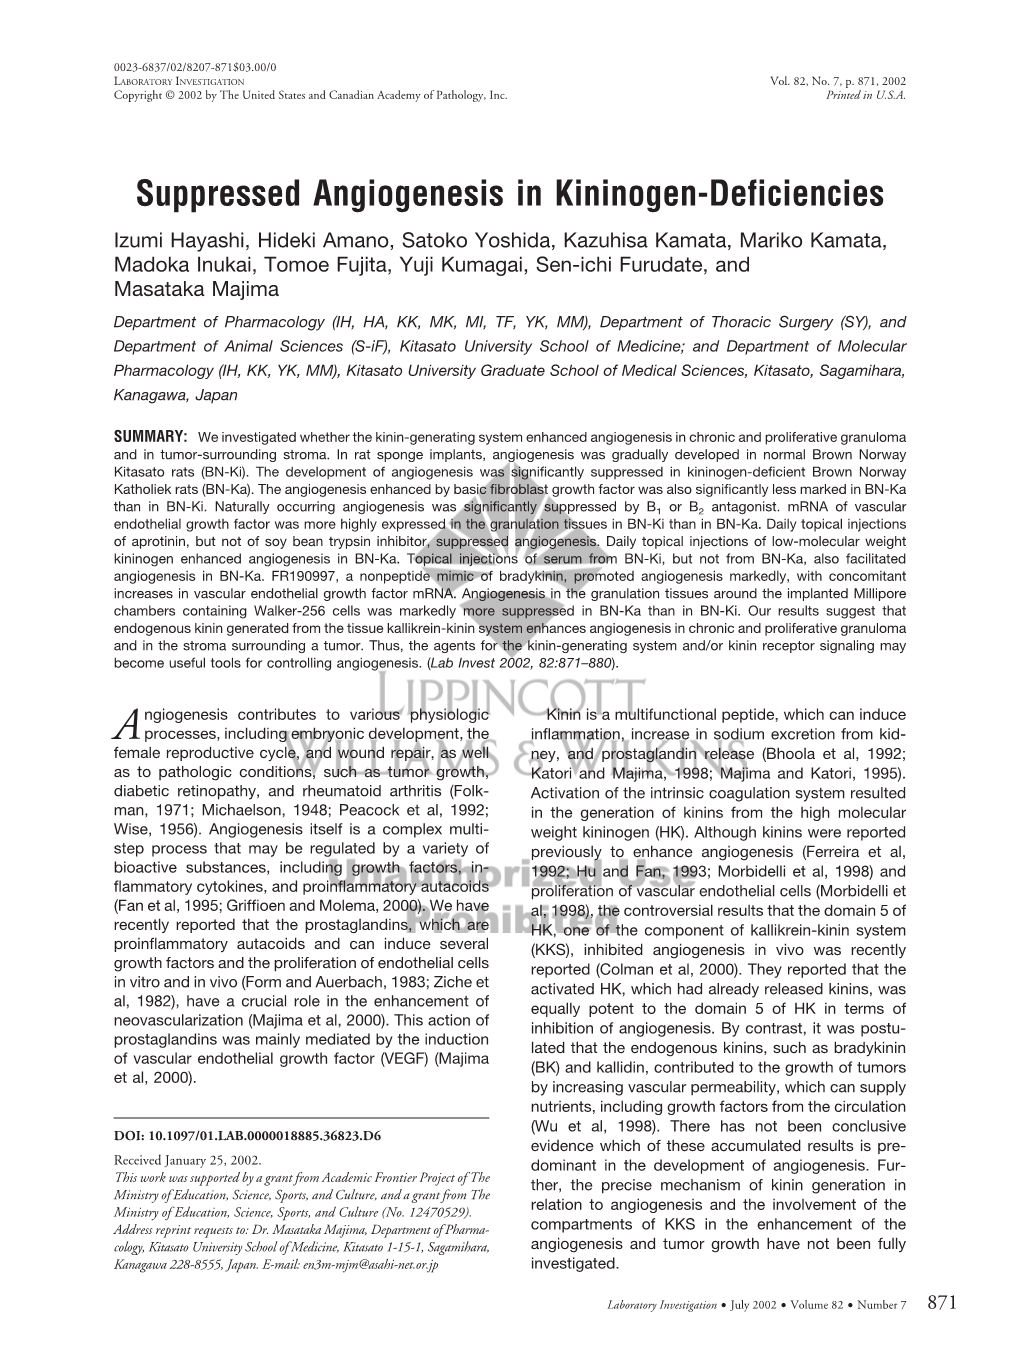 Suppressed Angiogenesis in Kininogen-Deficiencies